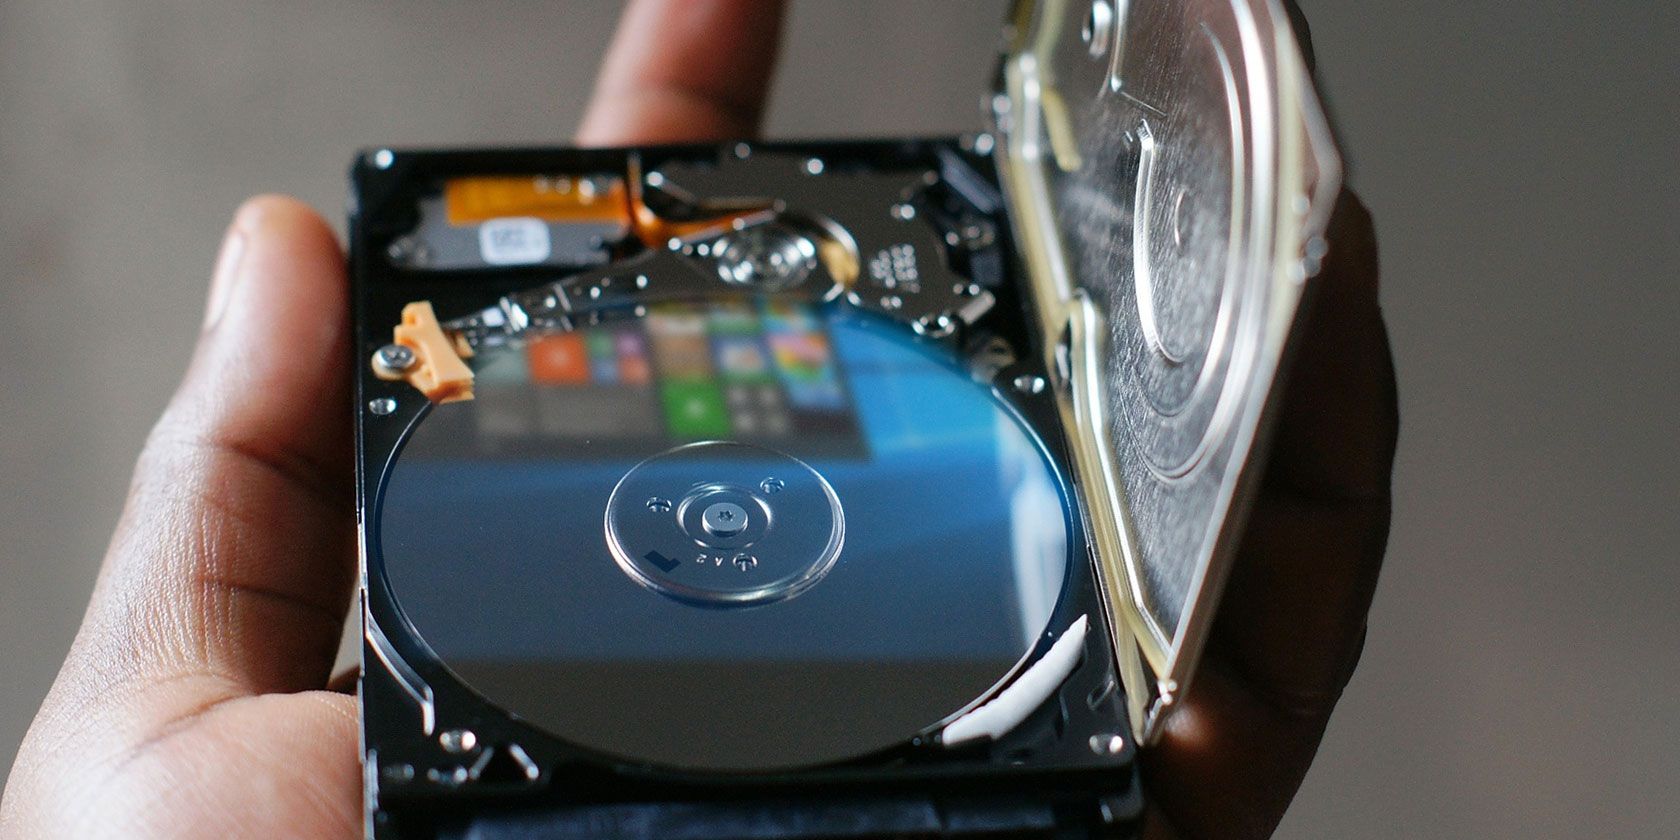 how to make space on mac hard drive